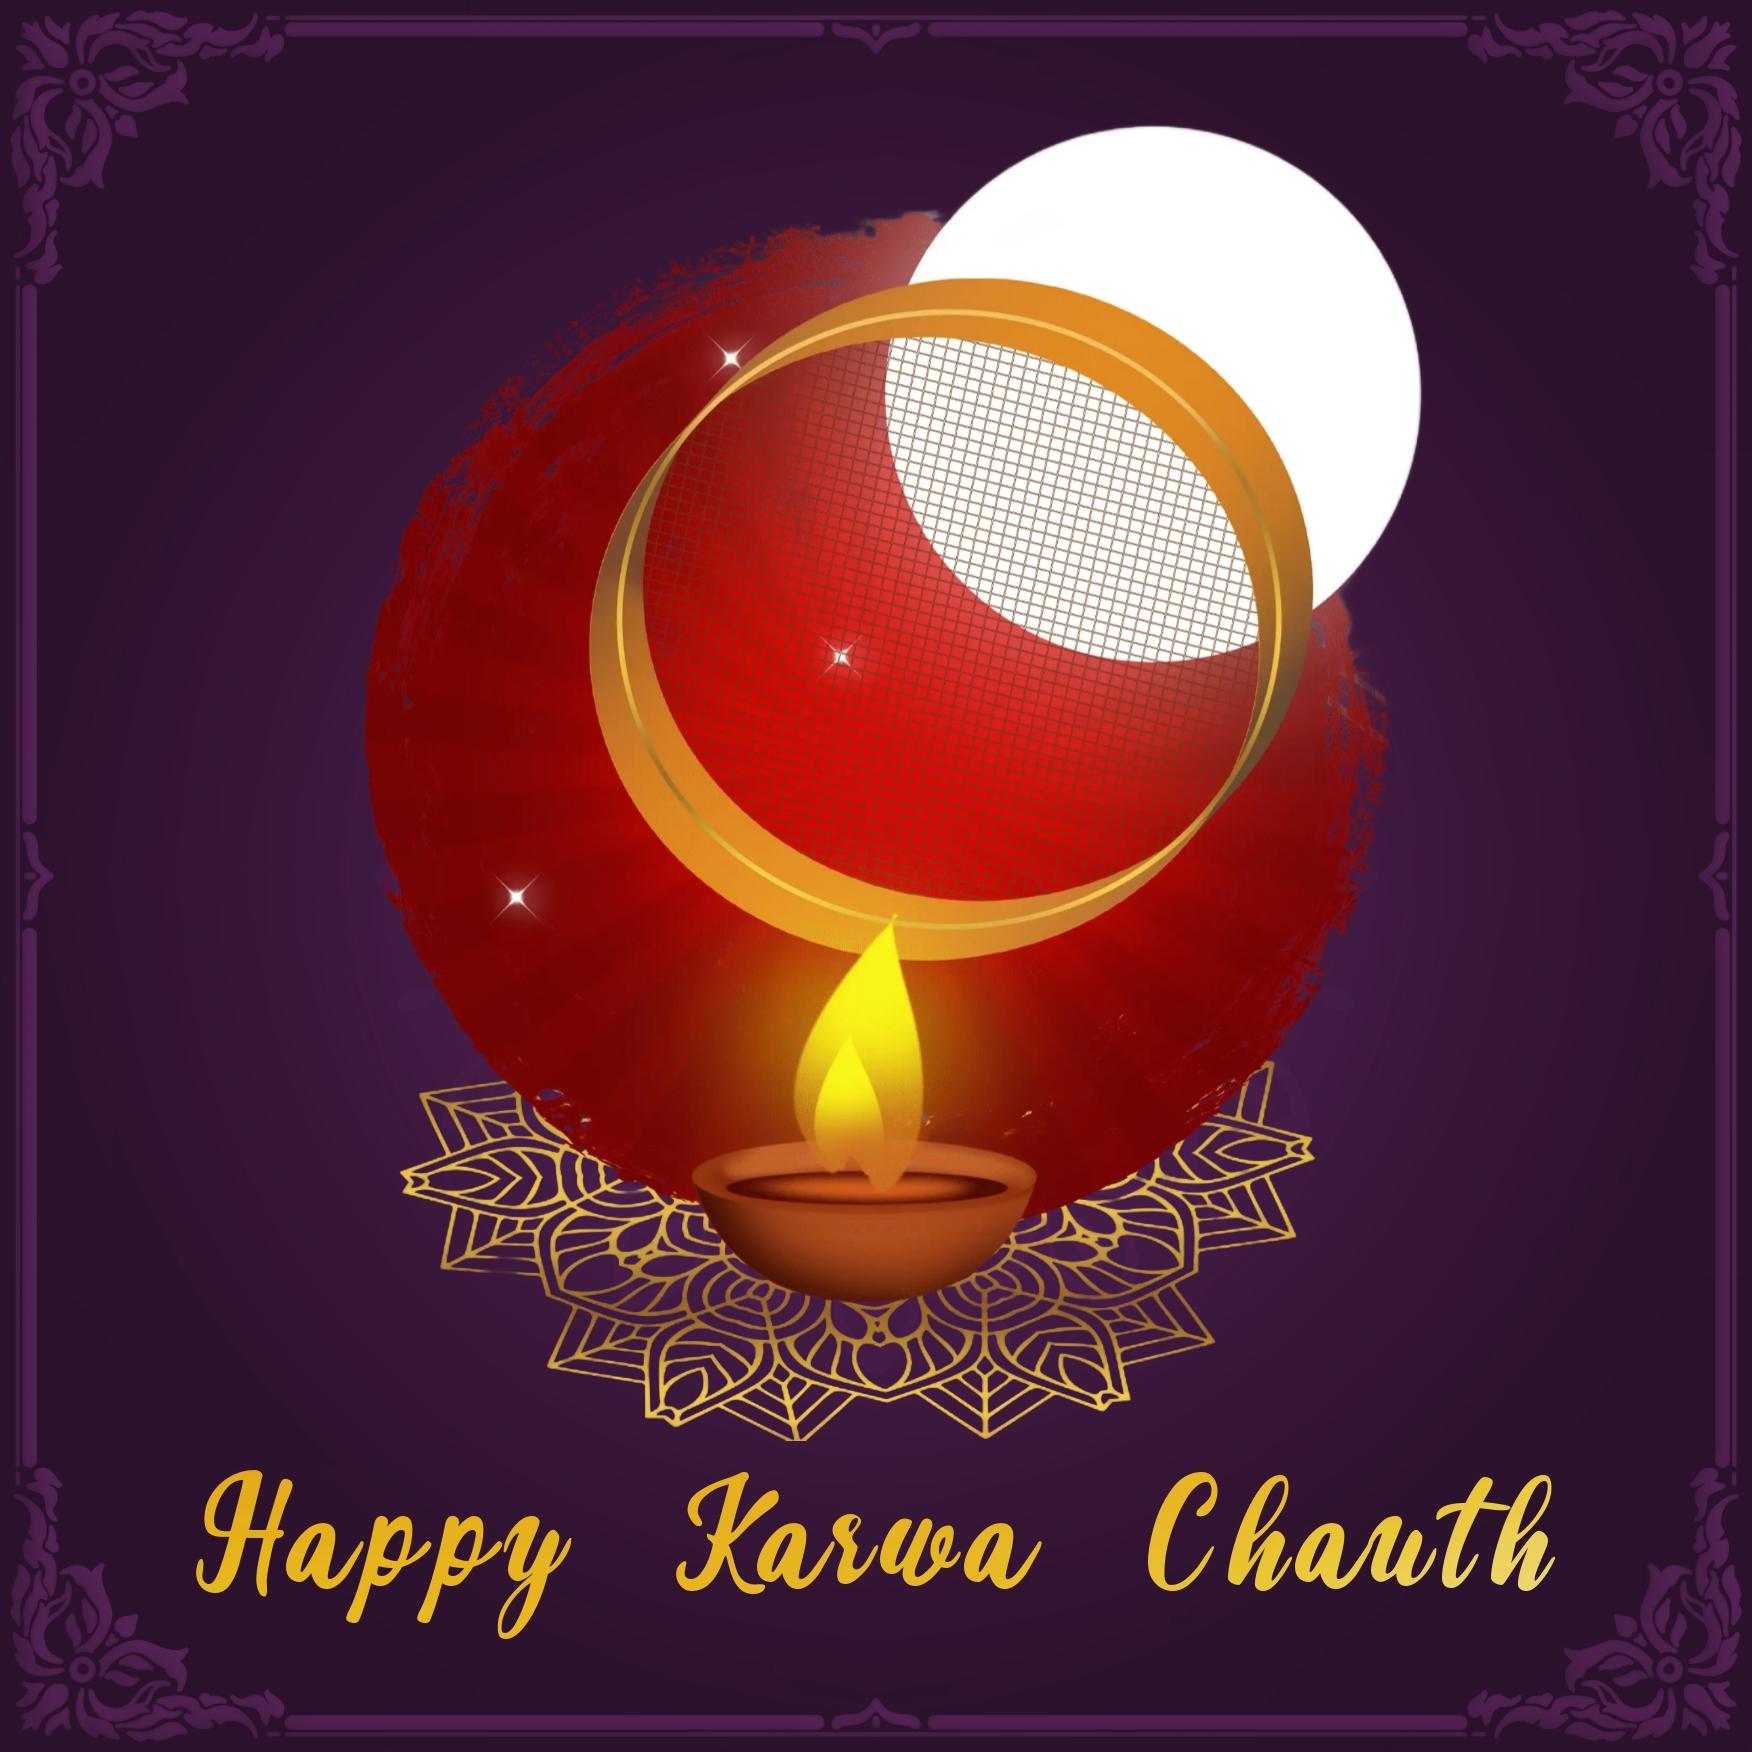 Happy Karwa Chauth Wishes Images